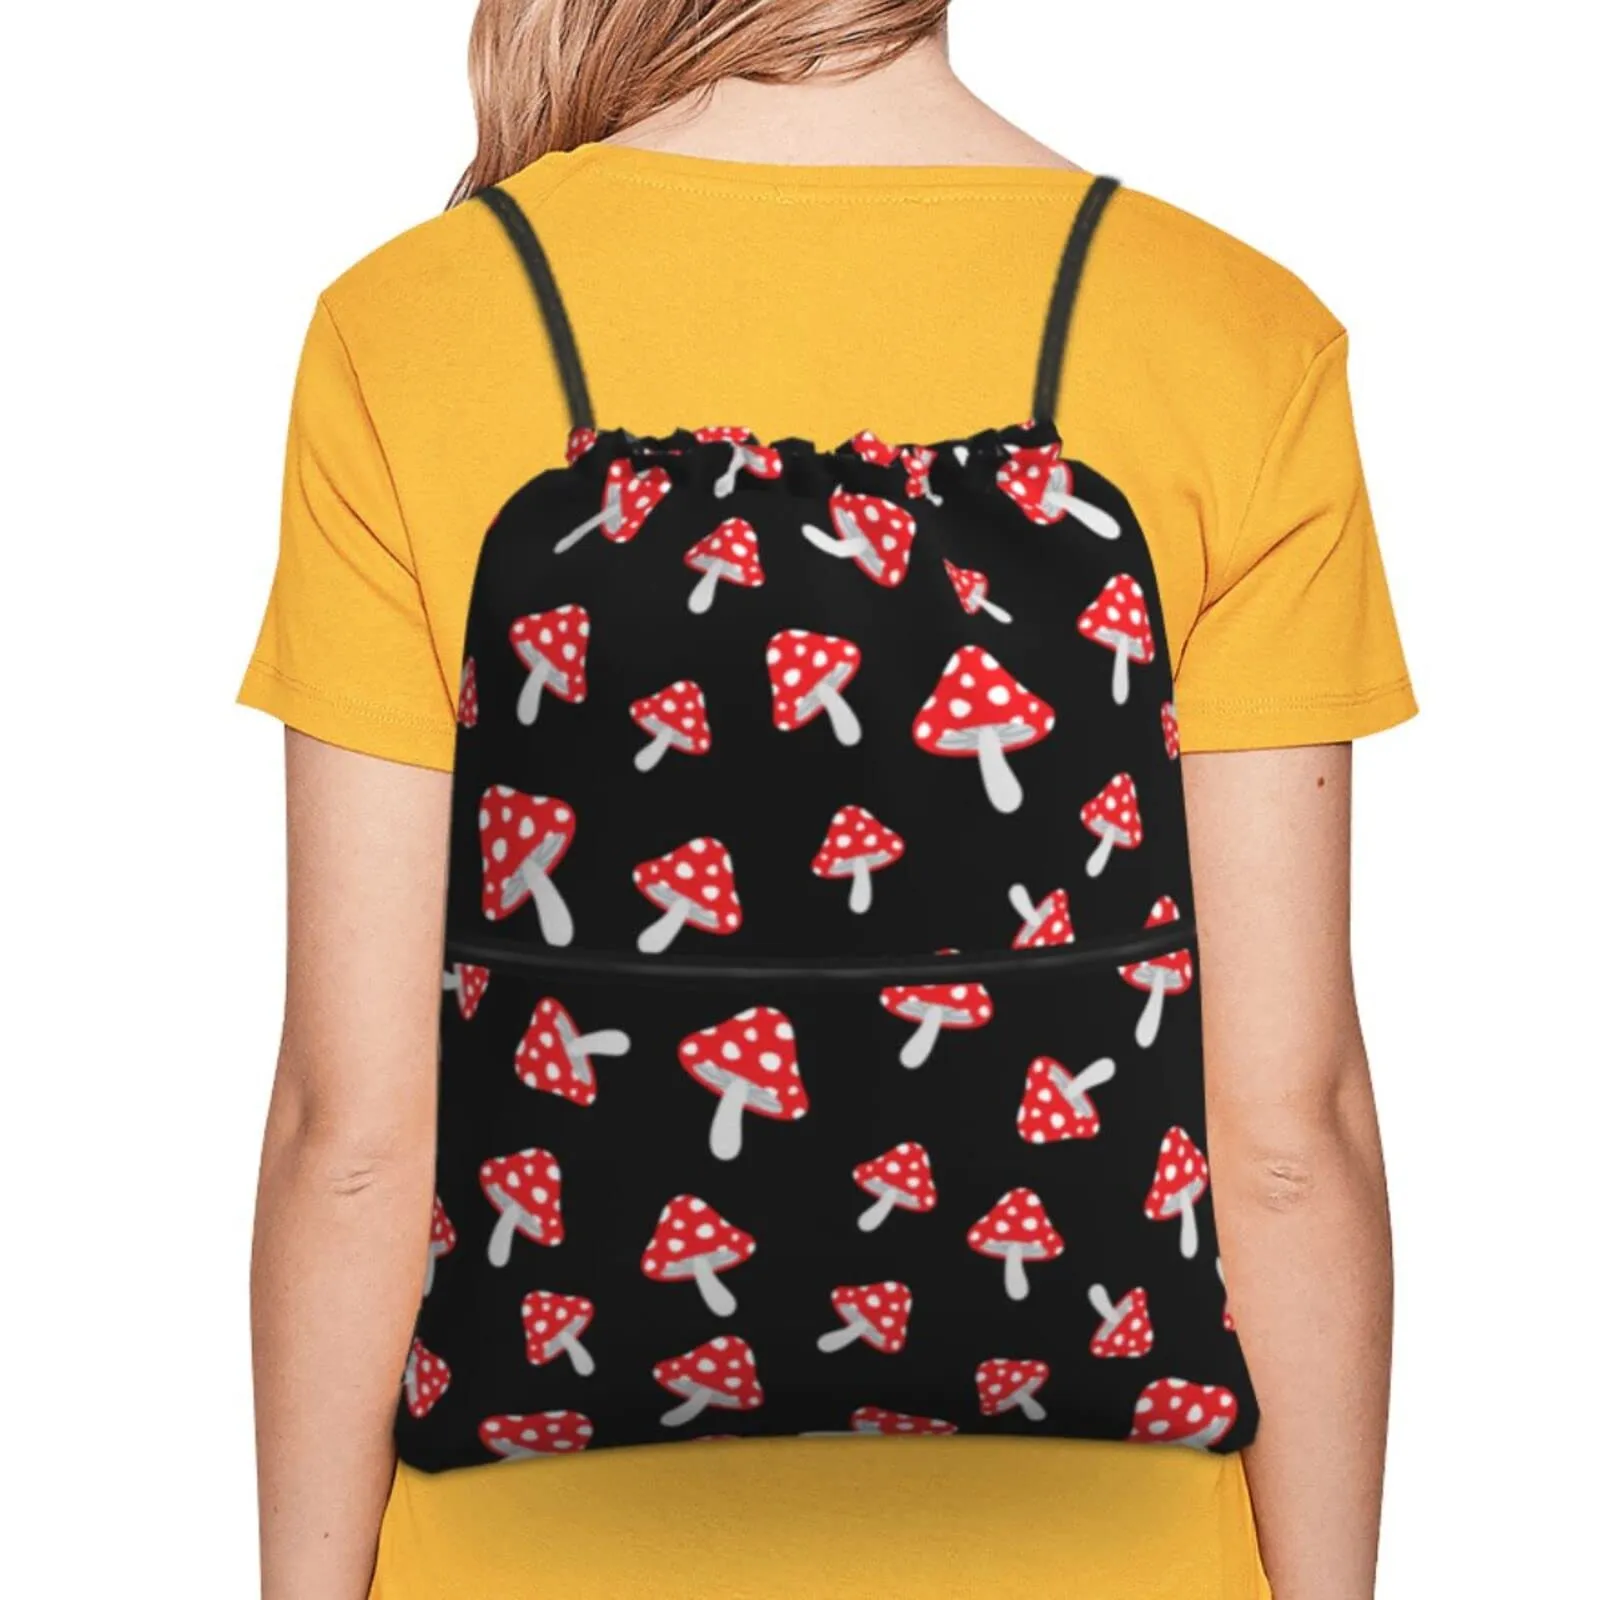 cartoon mushrooms drawstring backpack string bag sackpack for gym shopping beach sport yoga